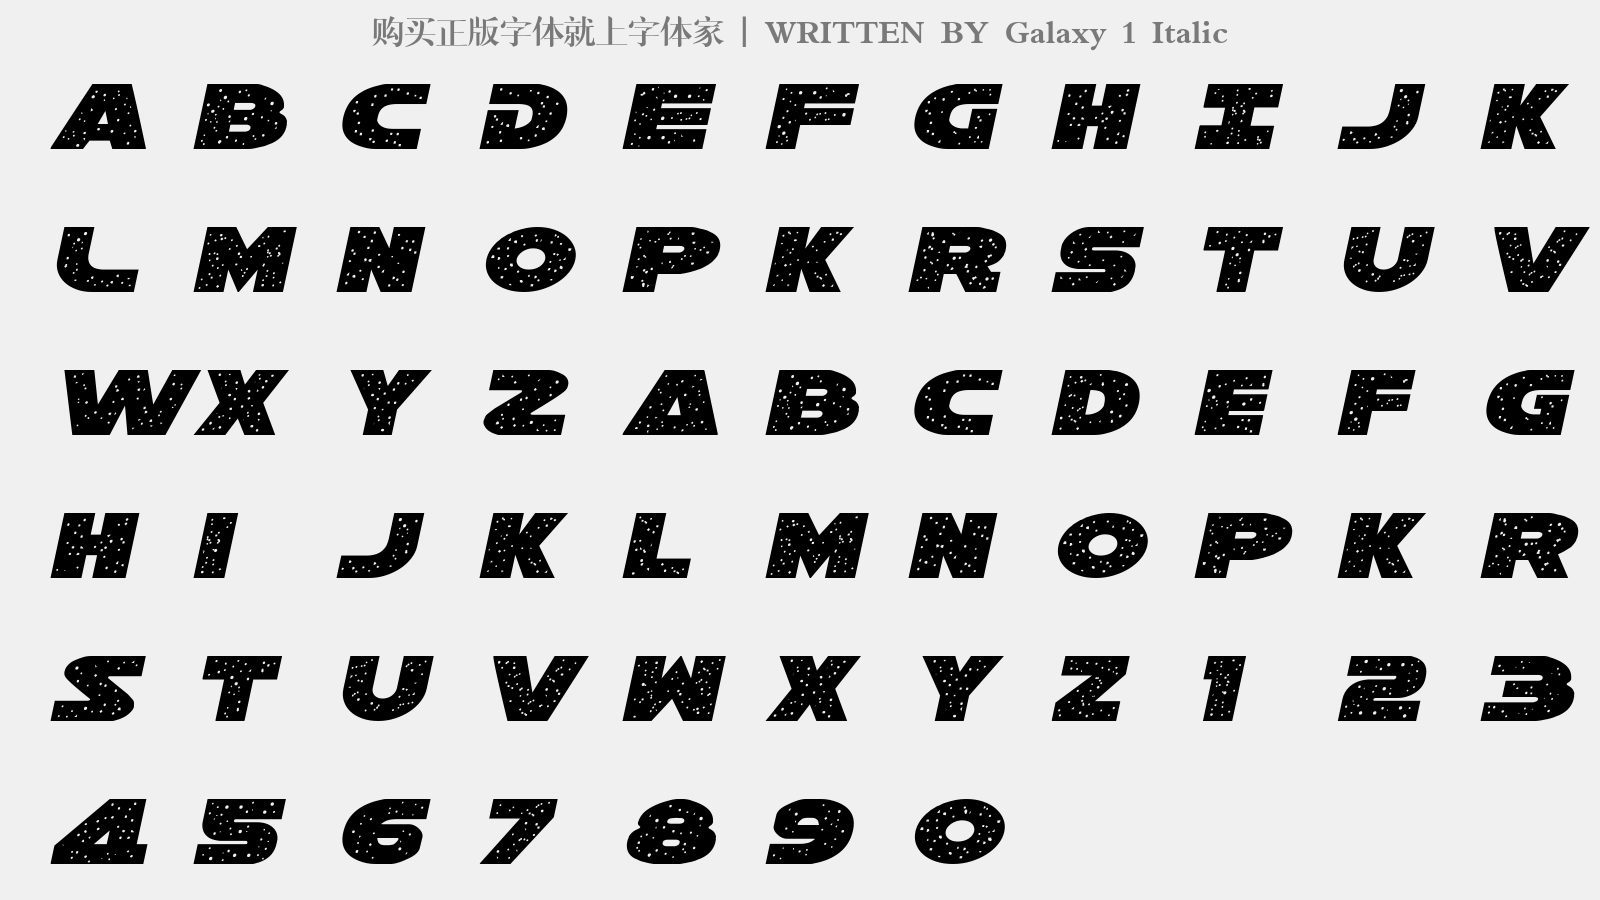 Galaxy 1 Italic - 大写字母/小写字母/数字